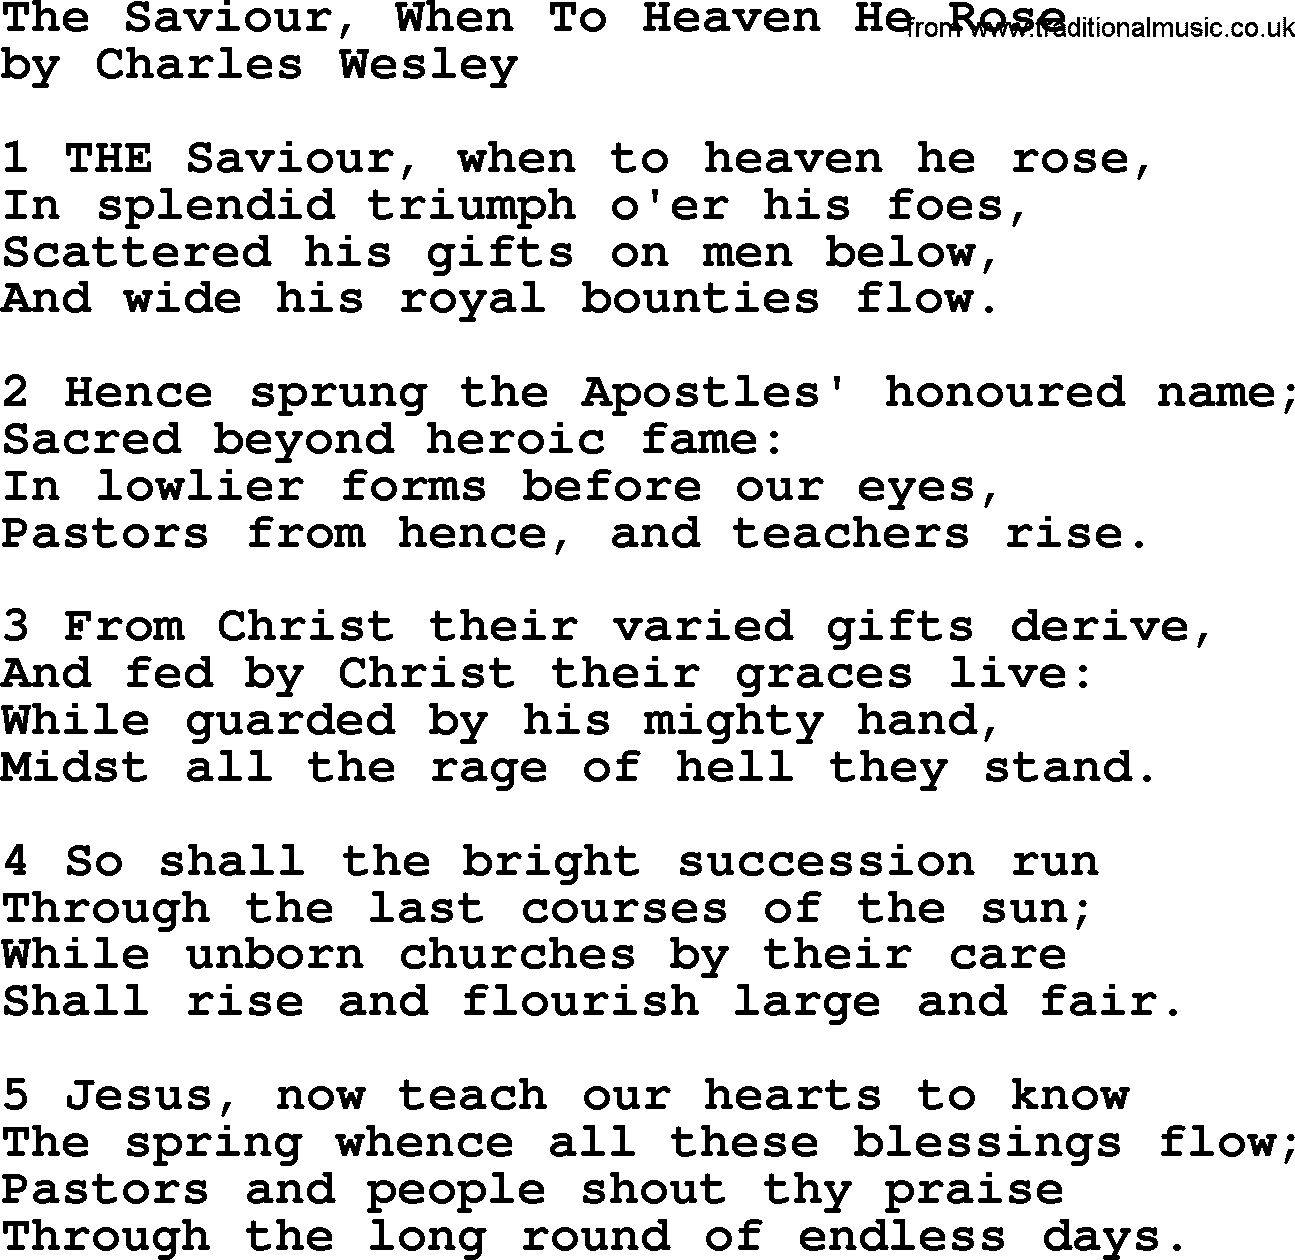 Charles Wesley hymn: The Saviour, When To Heaven He Rose, lyrics